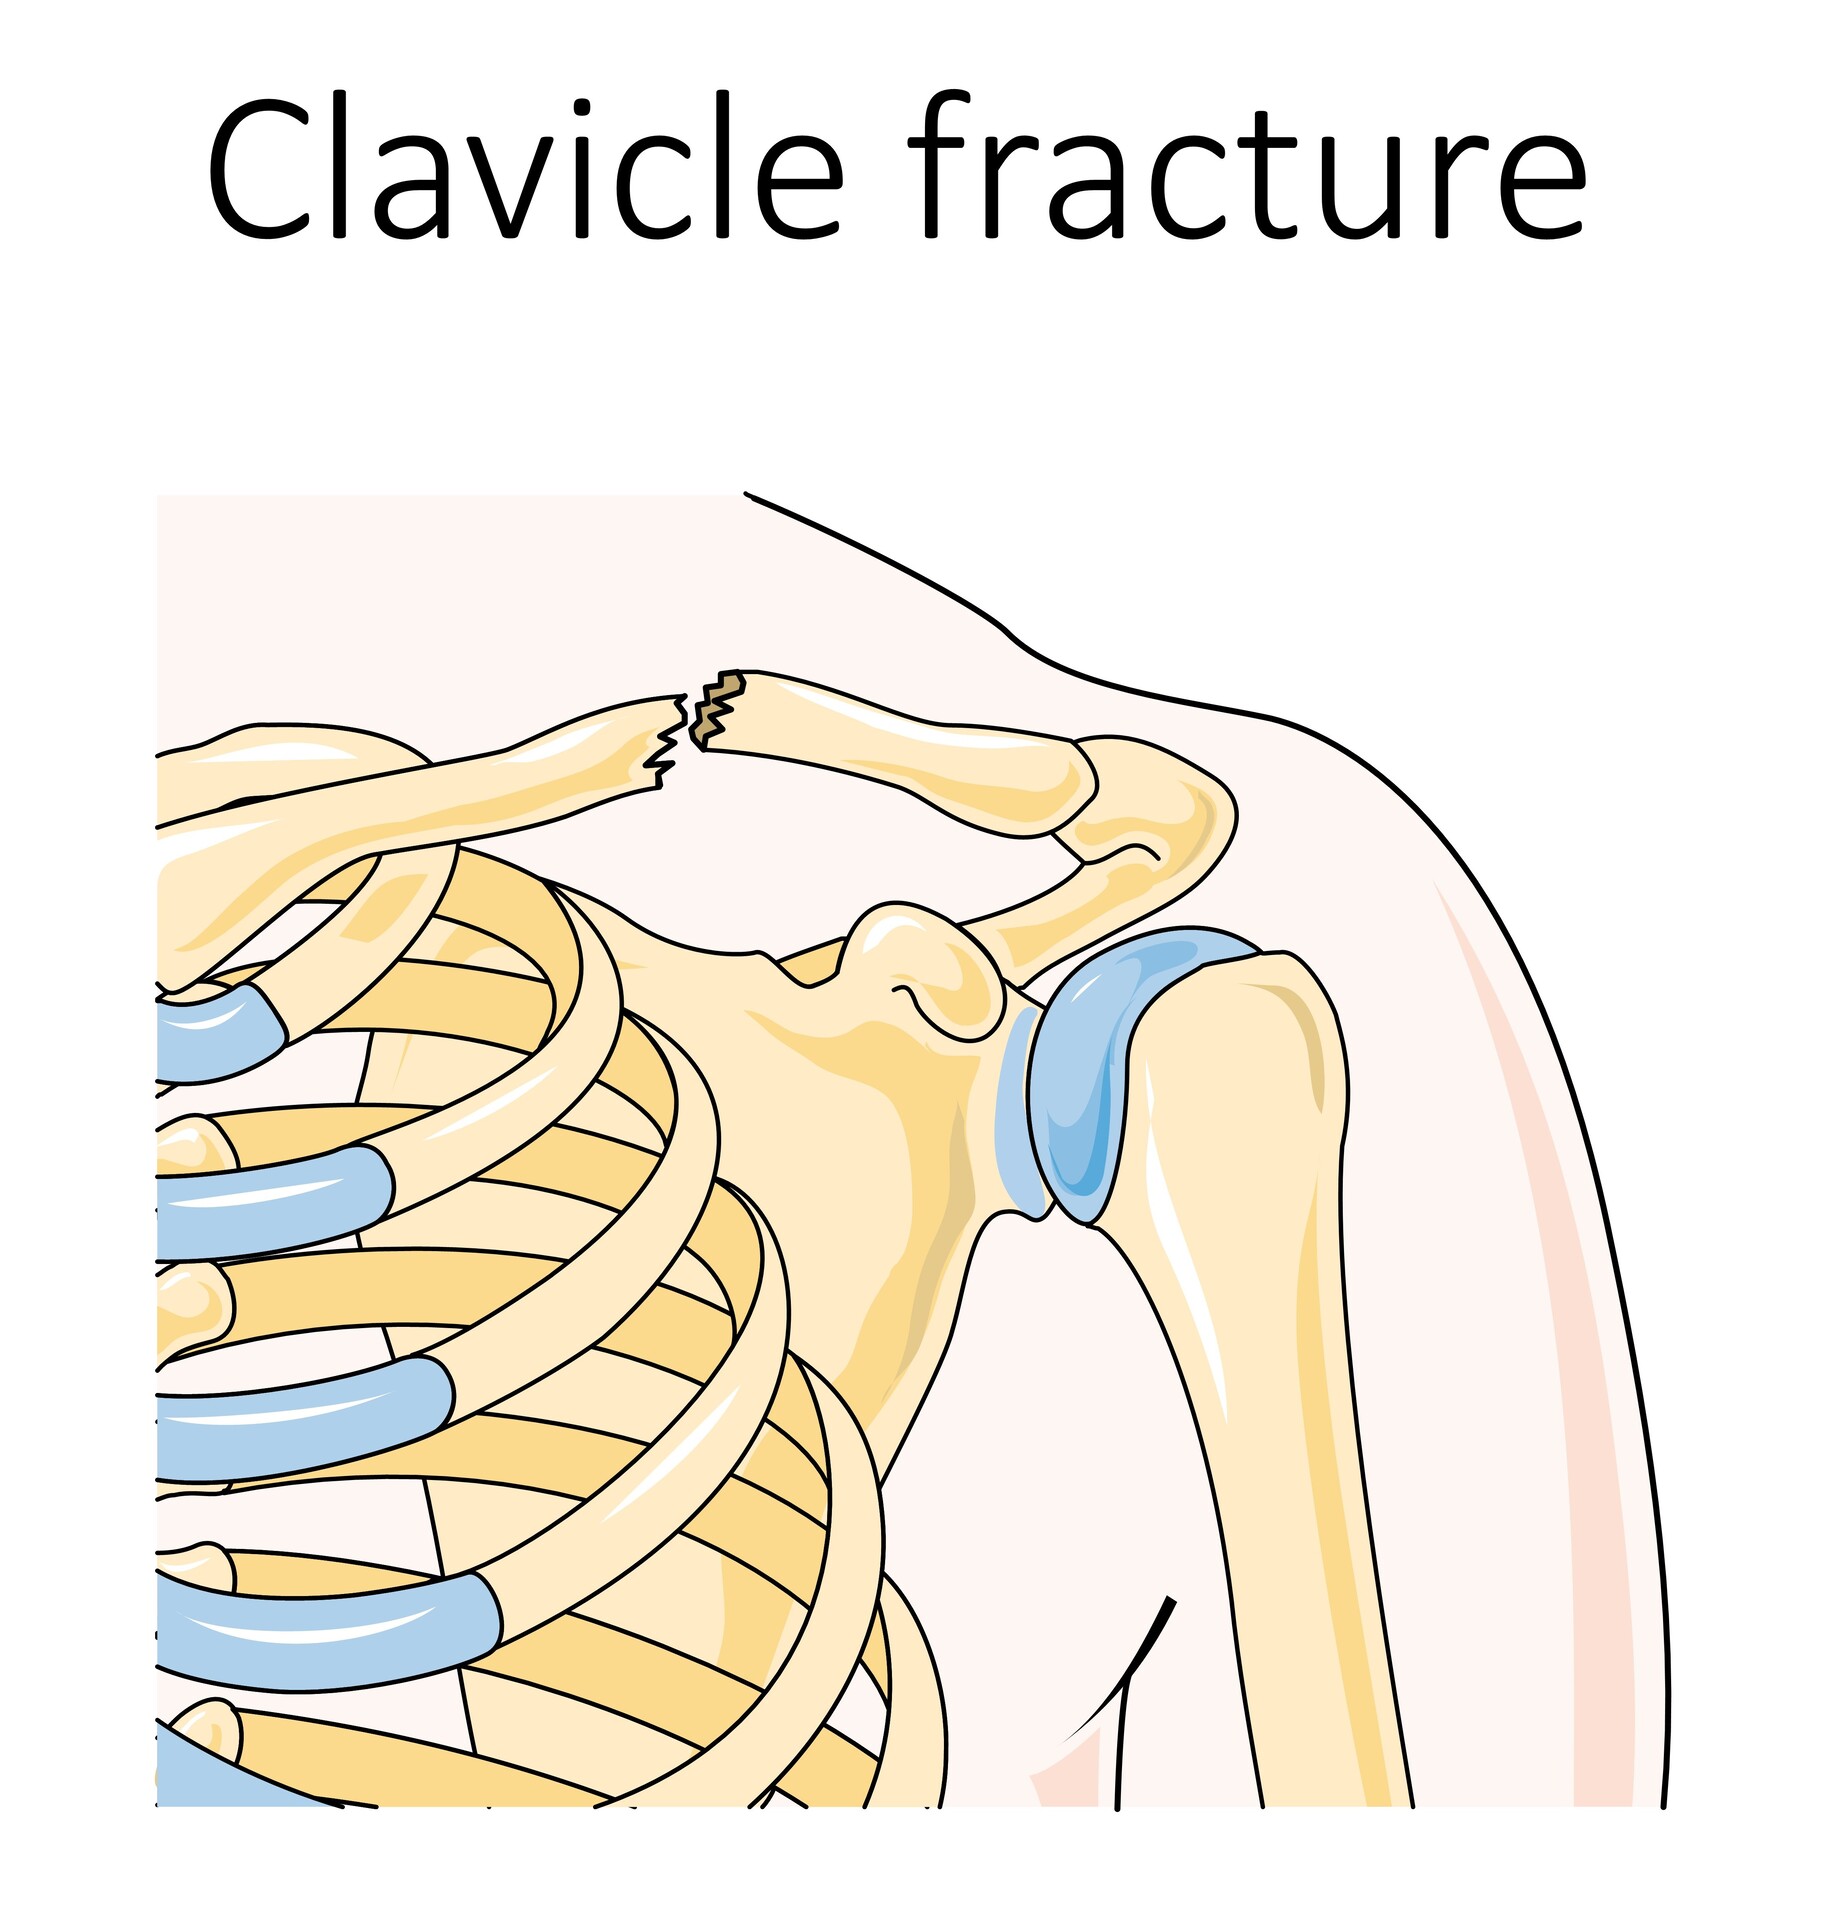 Scapula and Clavicle - Shoulder Girdle - Anatomy Tutorial 